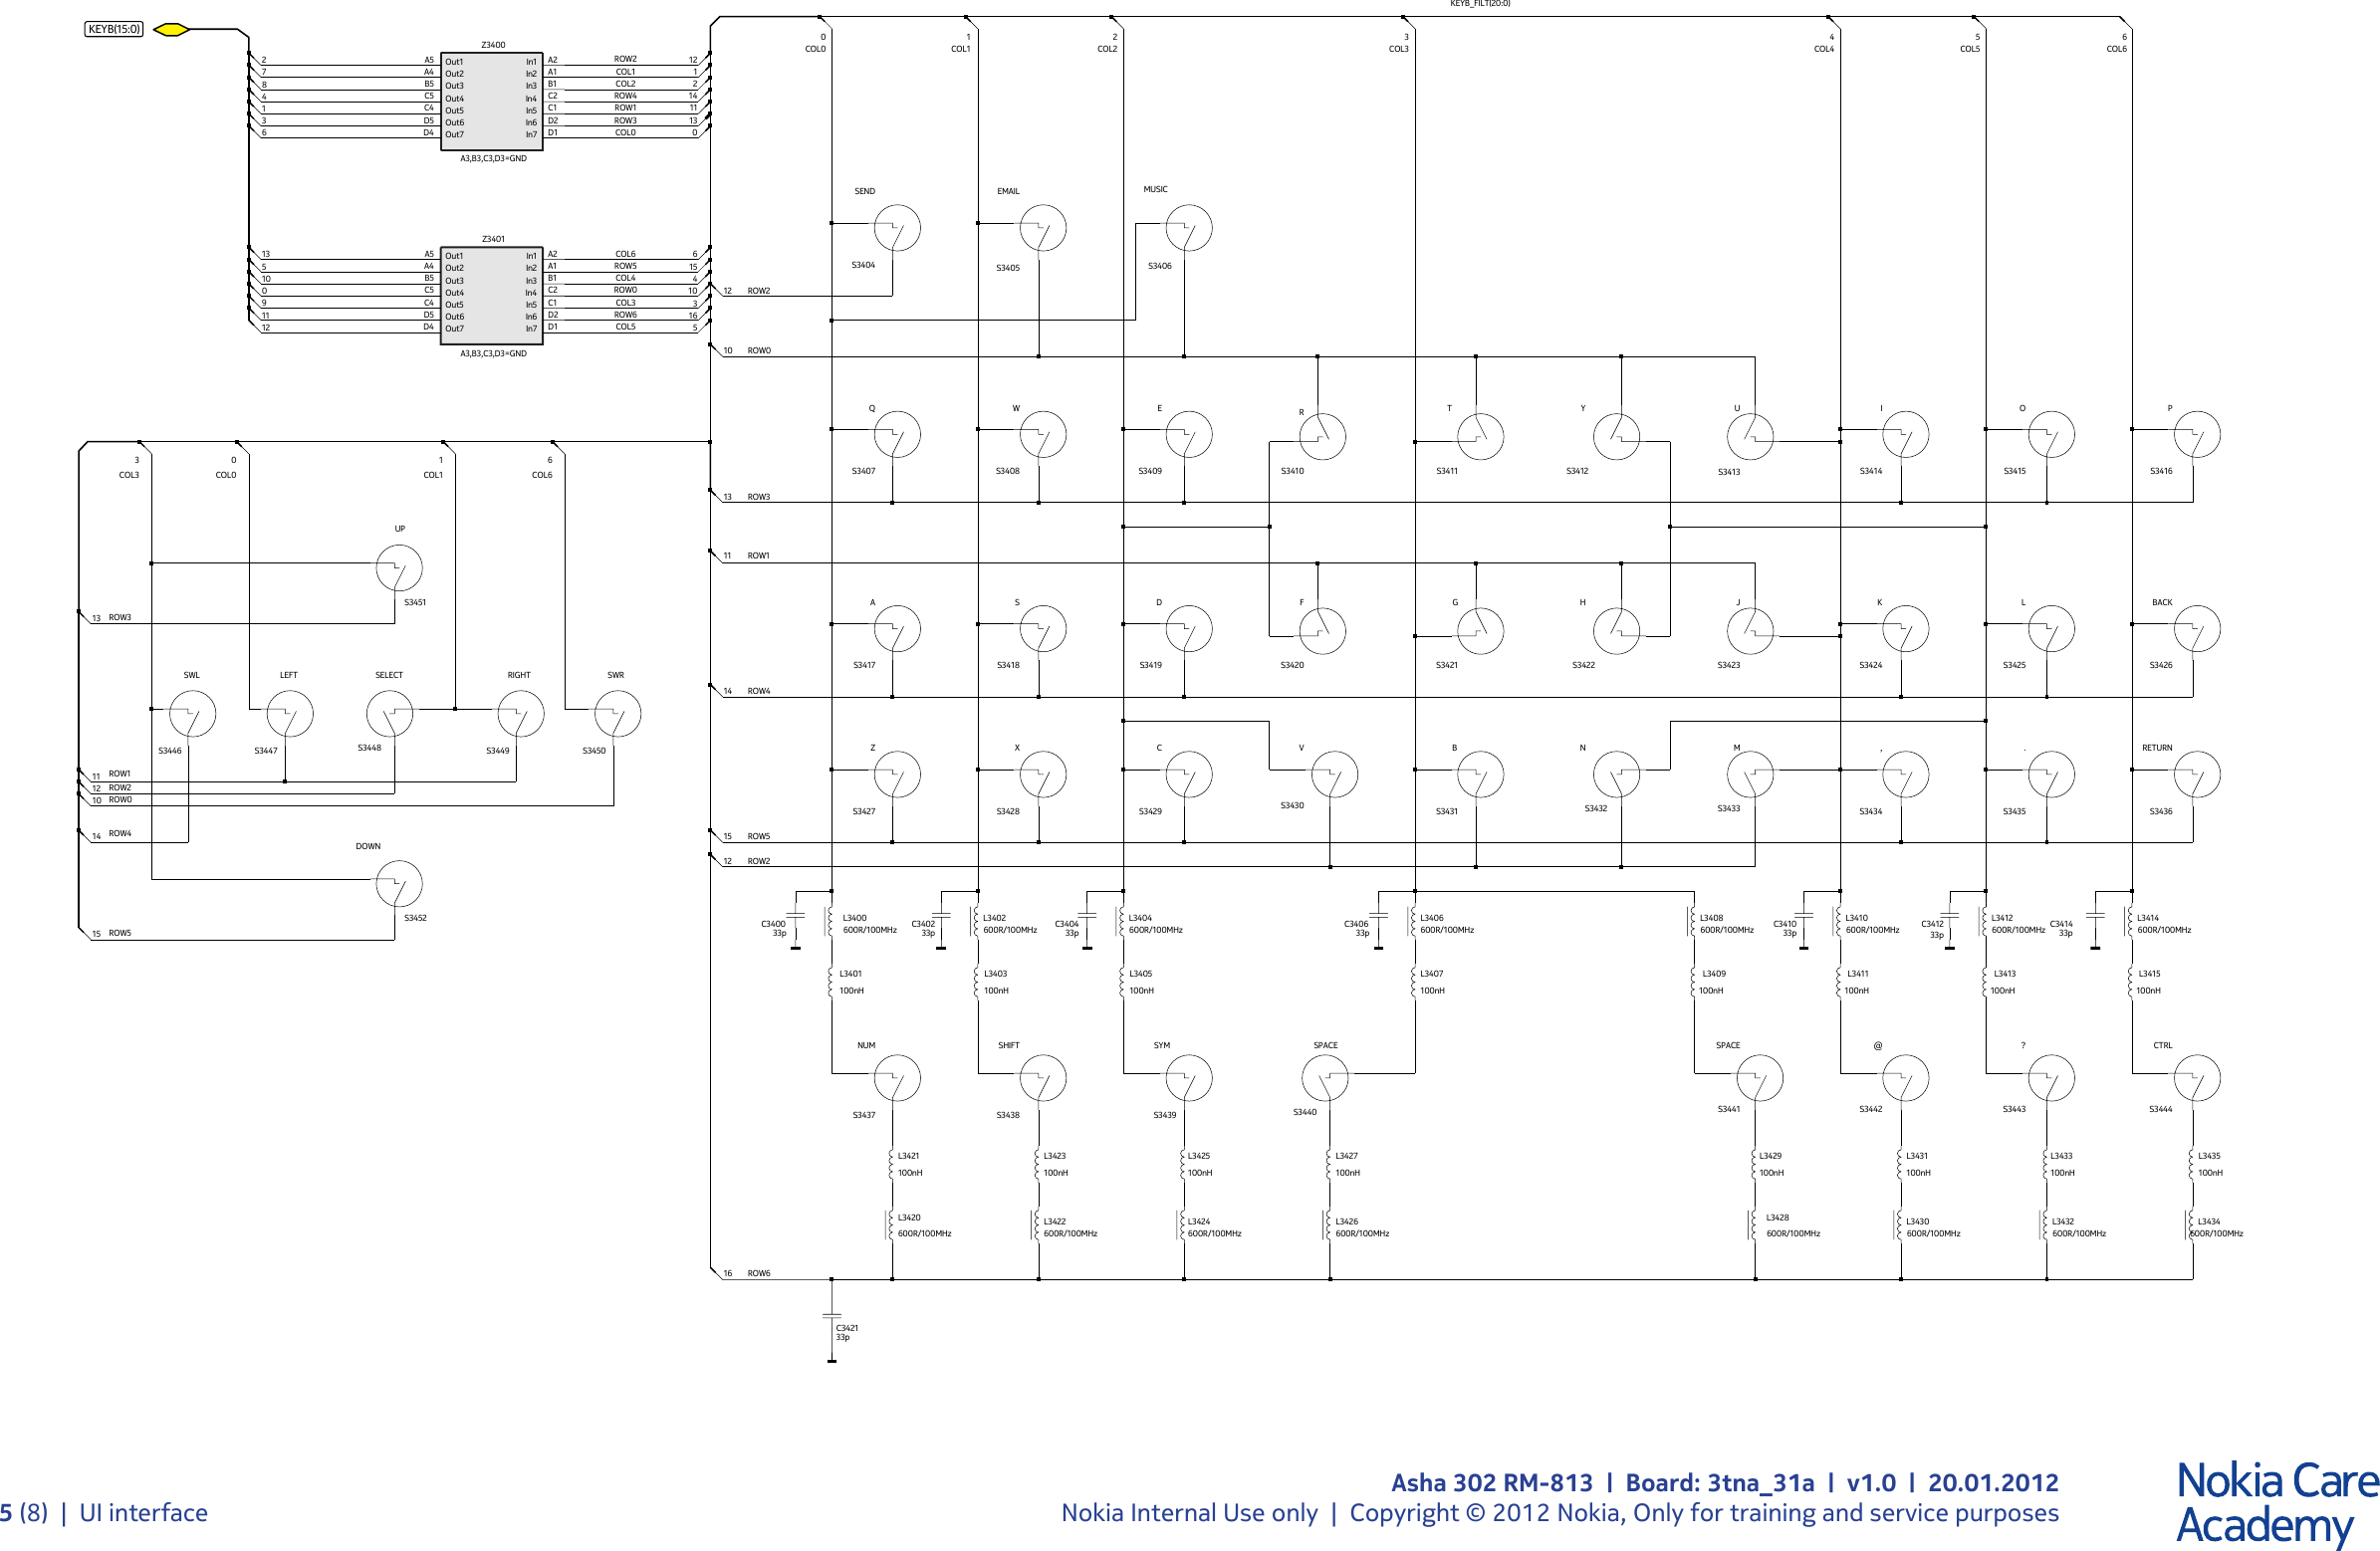 Page 5 of 9 - Nokia Asha 302 RM-813 - Service Schematics. Www.s-manuals.com. Schematics V1.0